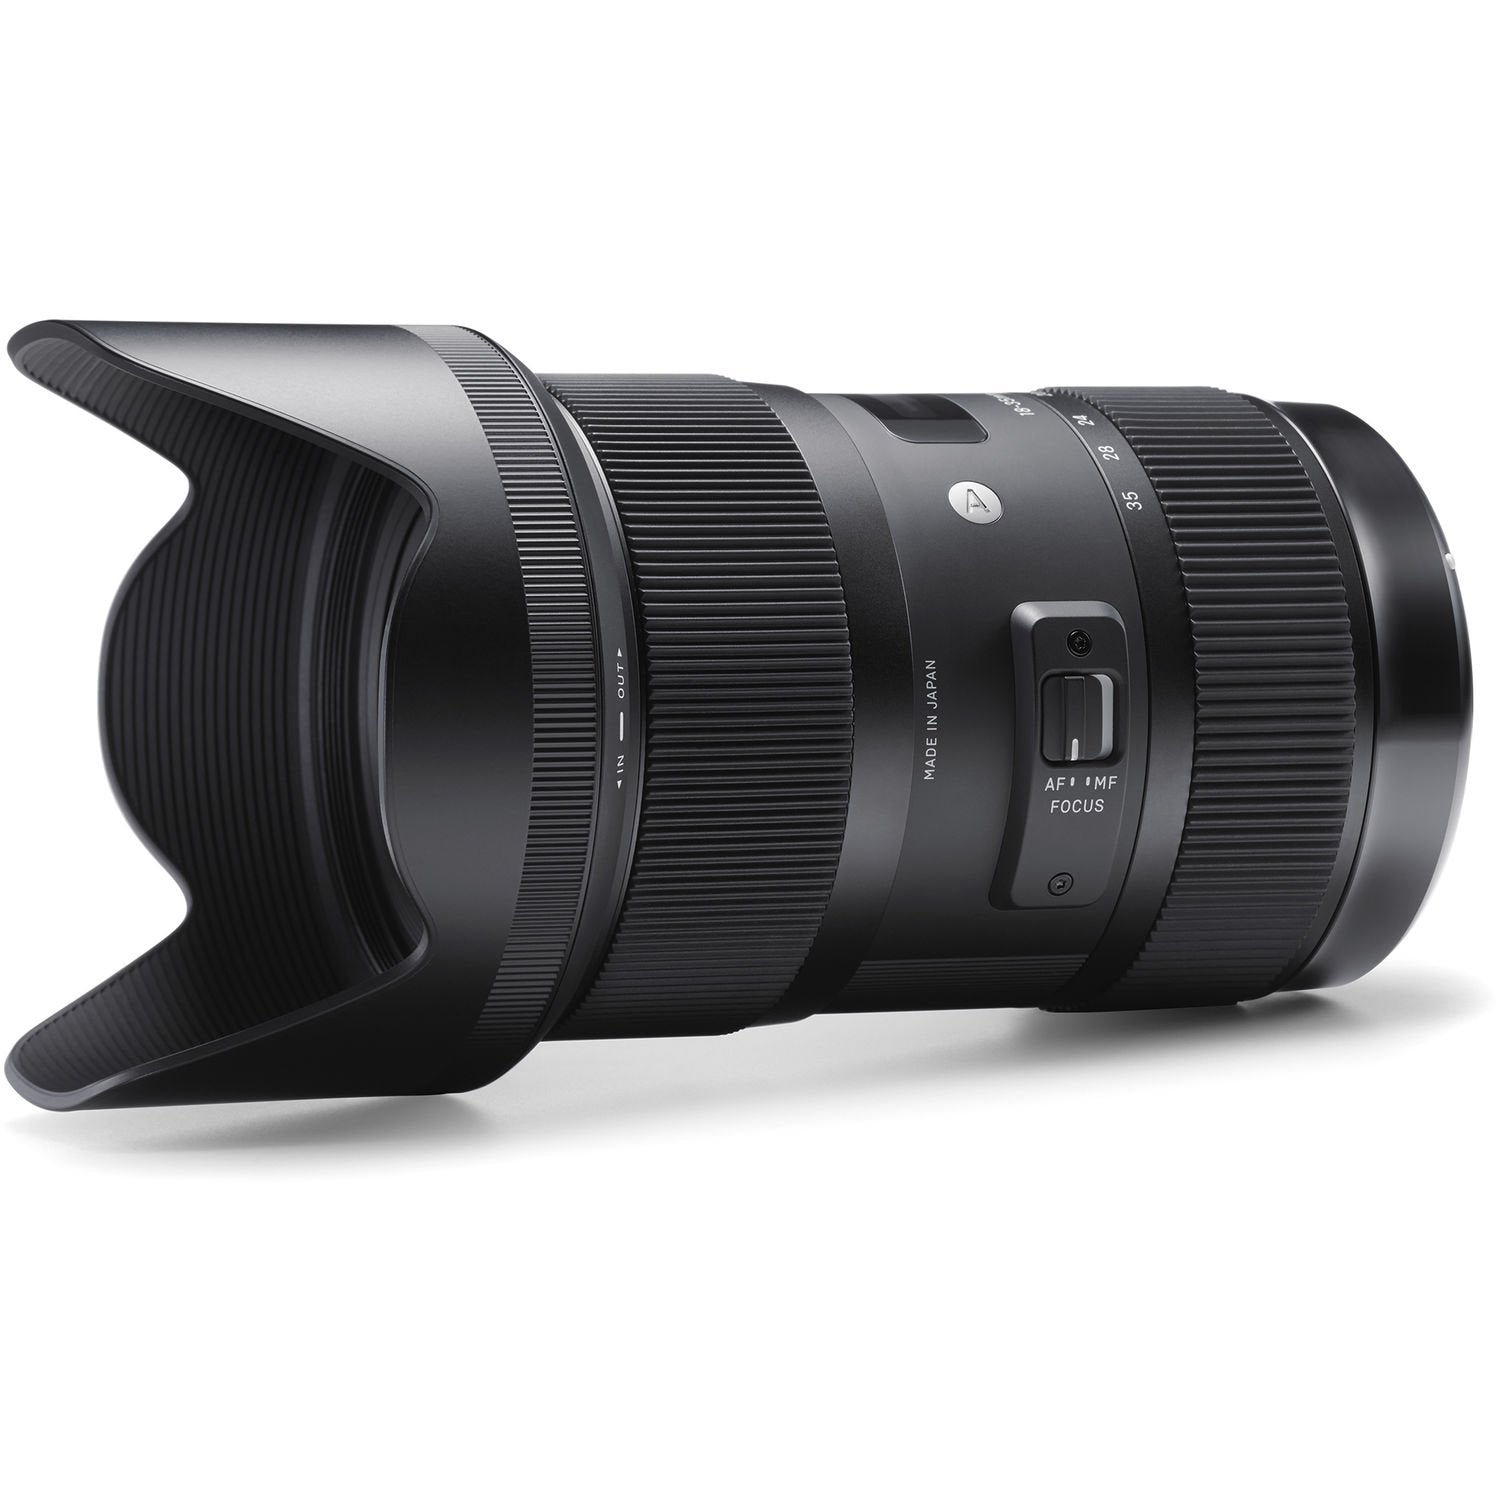 Sigma 18-35mm f/1.8 DC HSM Art Lens for Nikon # 210-306 + 72mm UV Filter + Lens Pen Cleaner + Deluxe Cleaning Kit Bundle